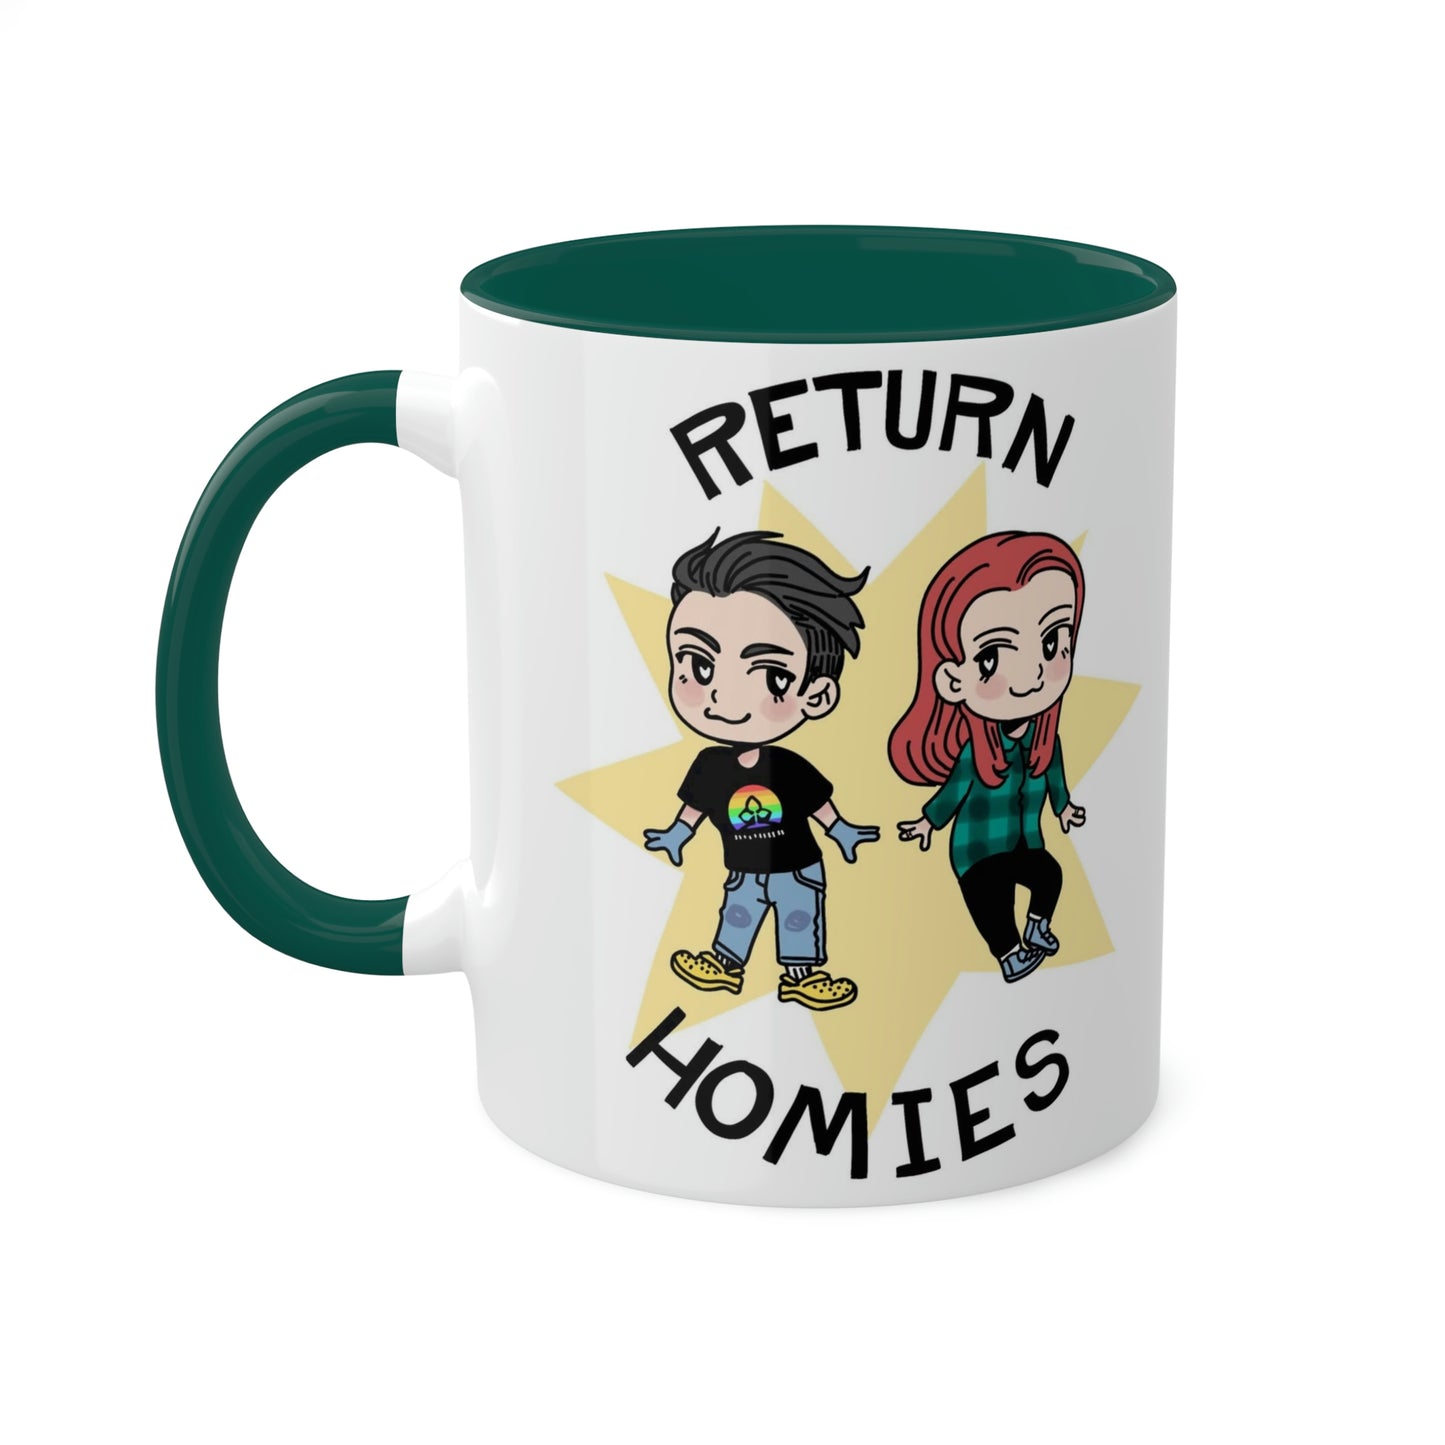 Return Homies Colorful Mug, 11oz